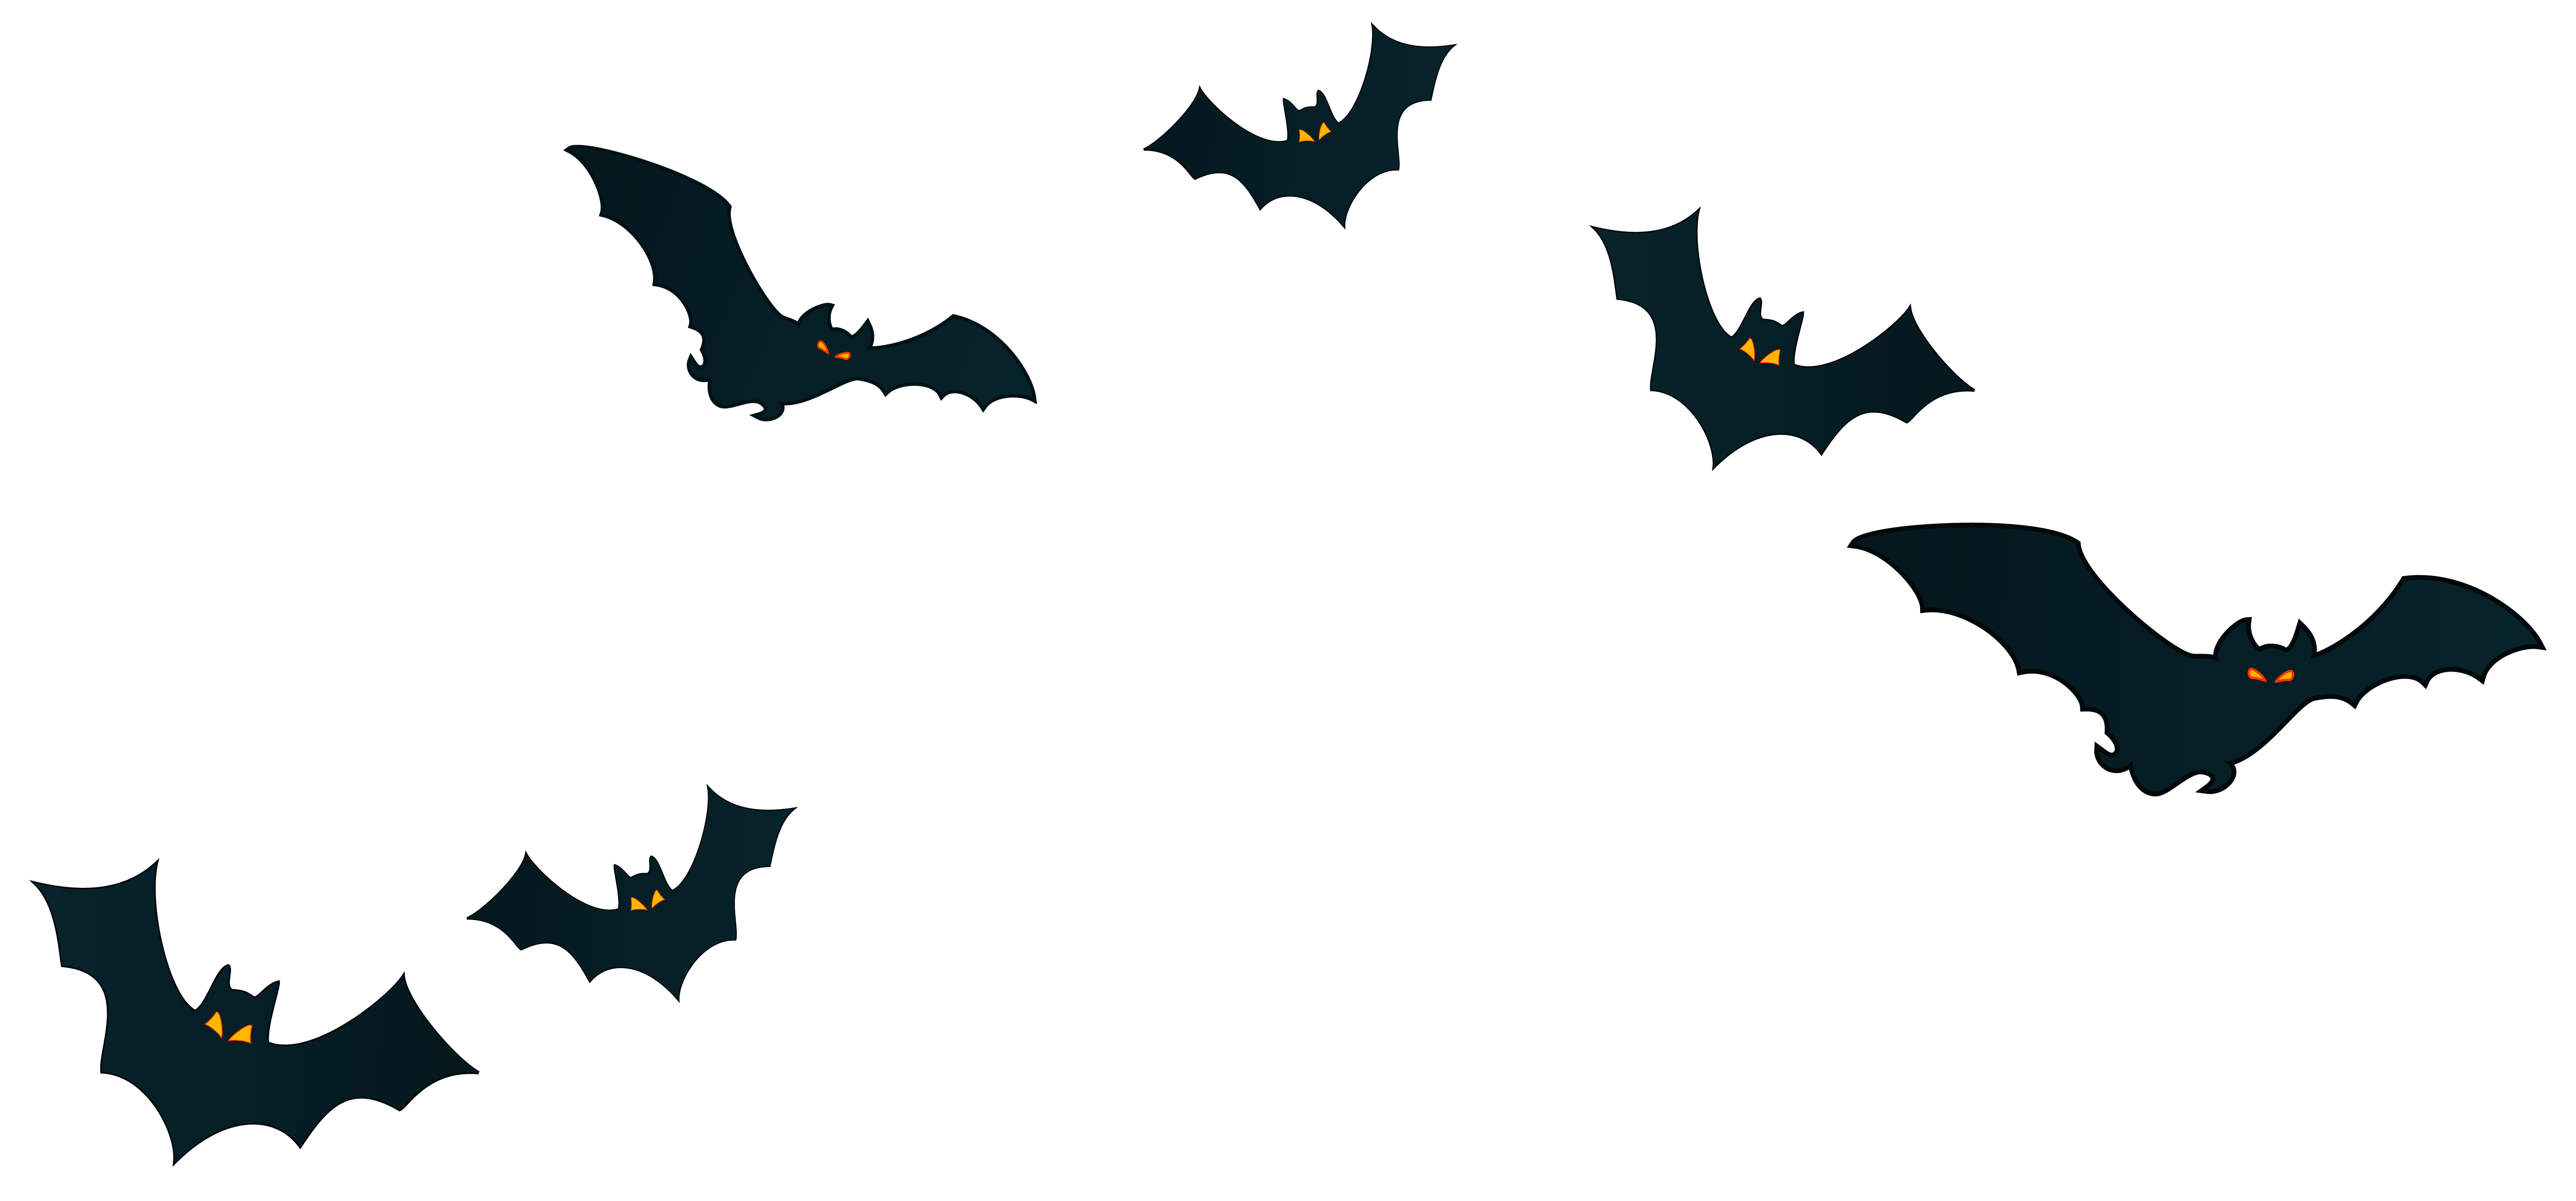 Bats decor clipart image. Halloween png images